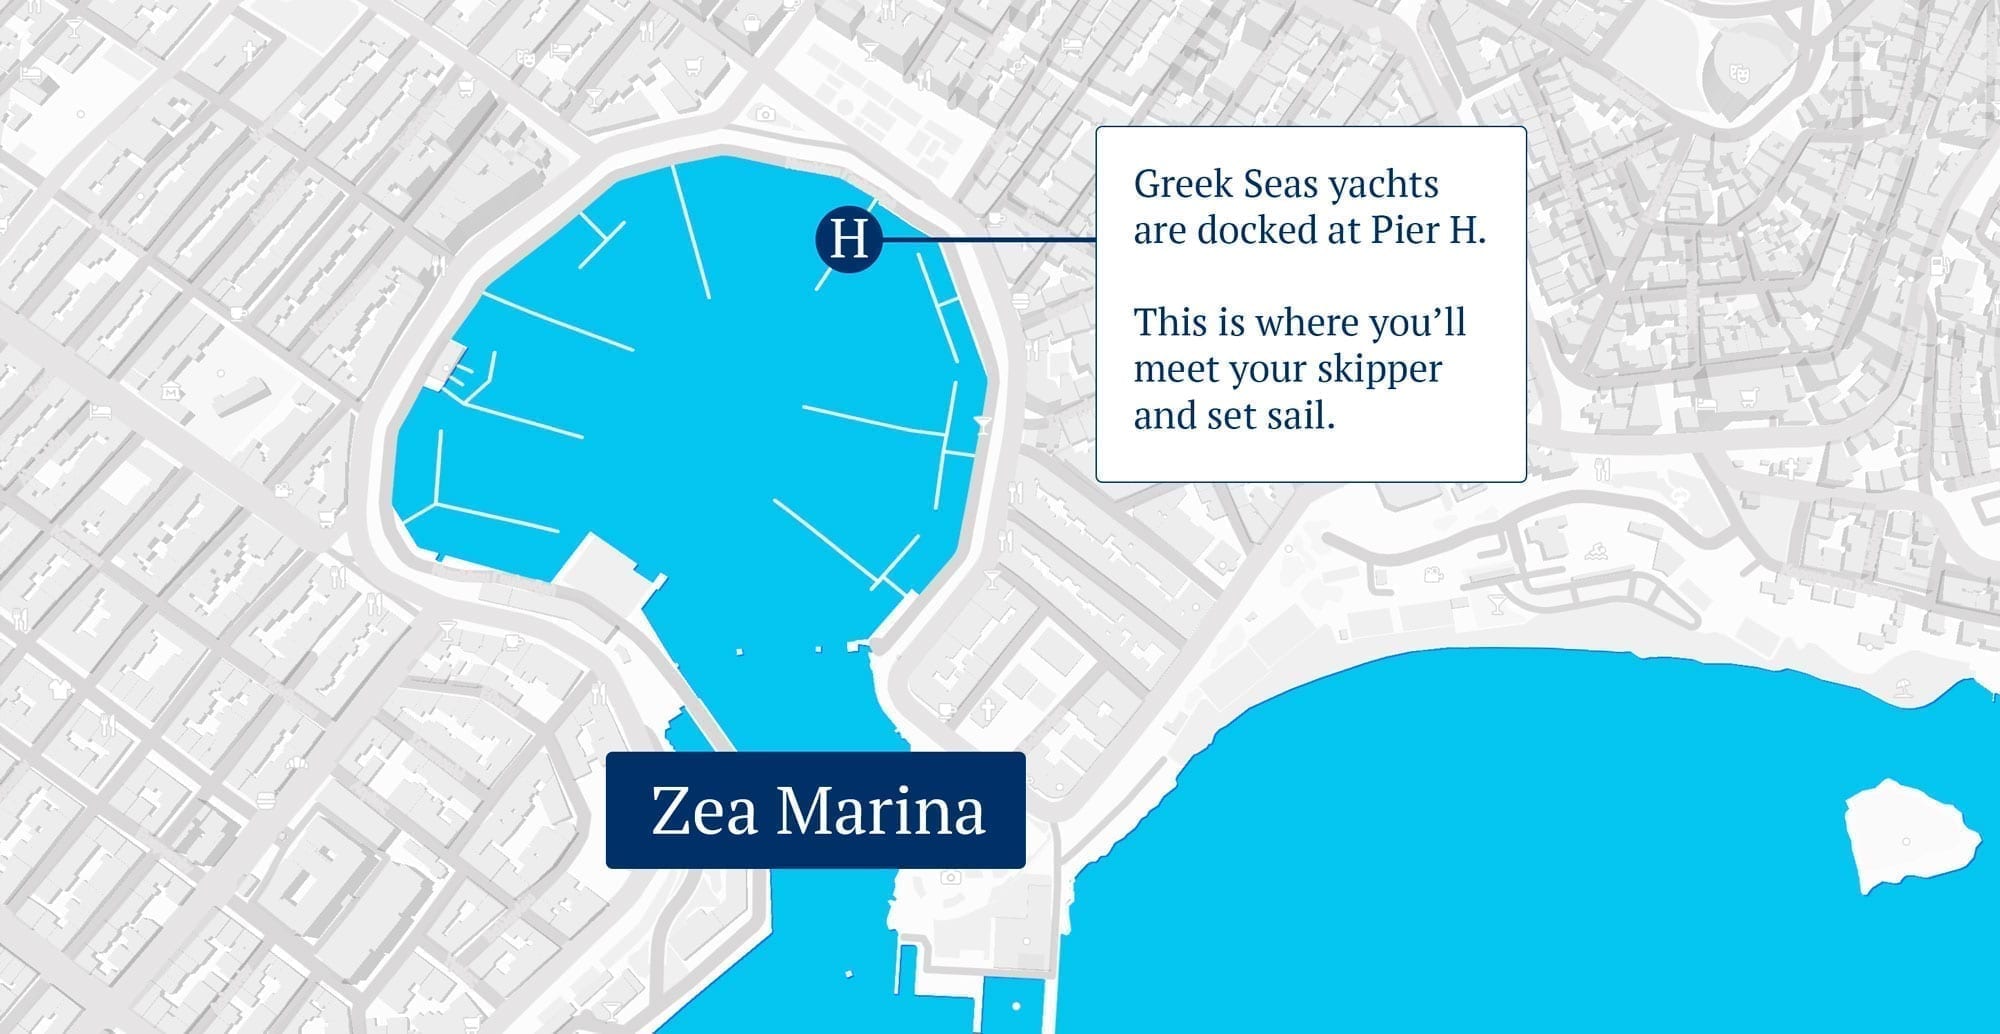 Zea Marina and Greek Seas